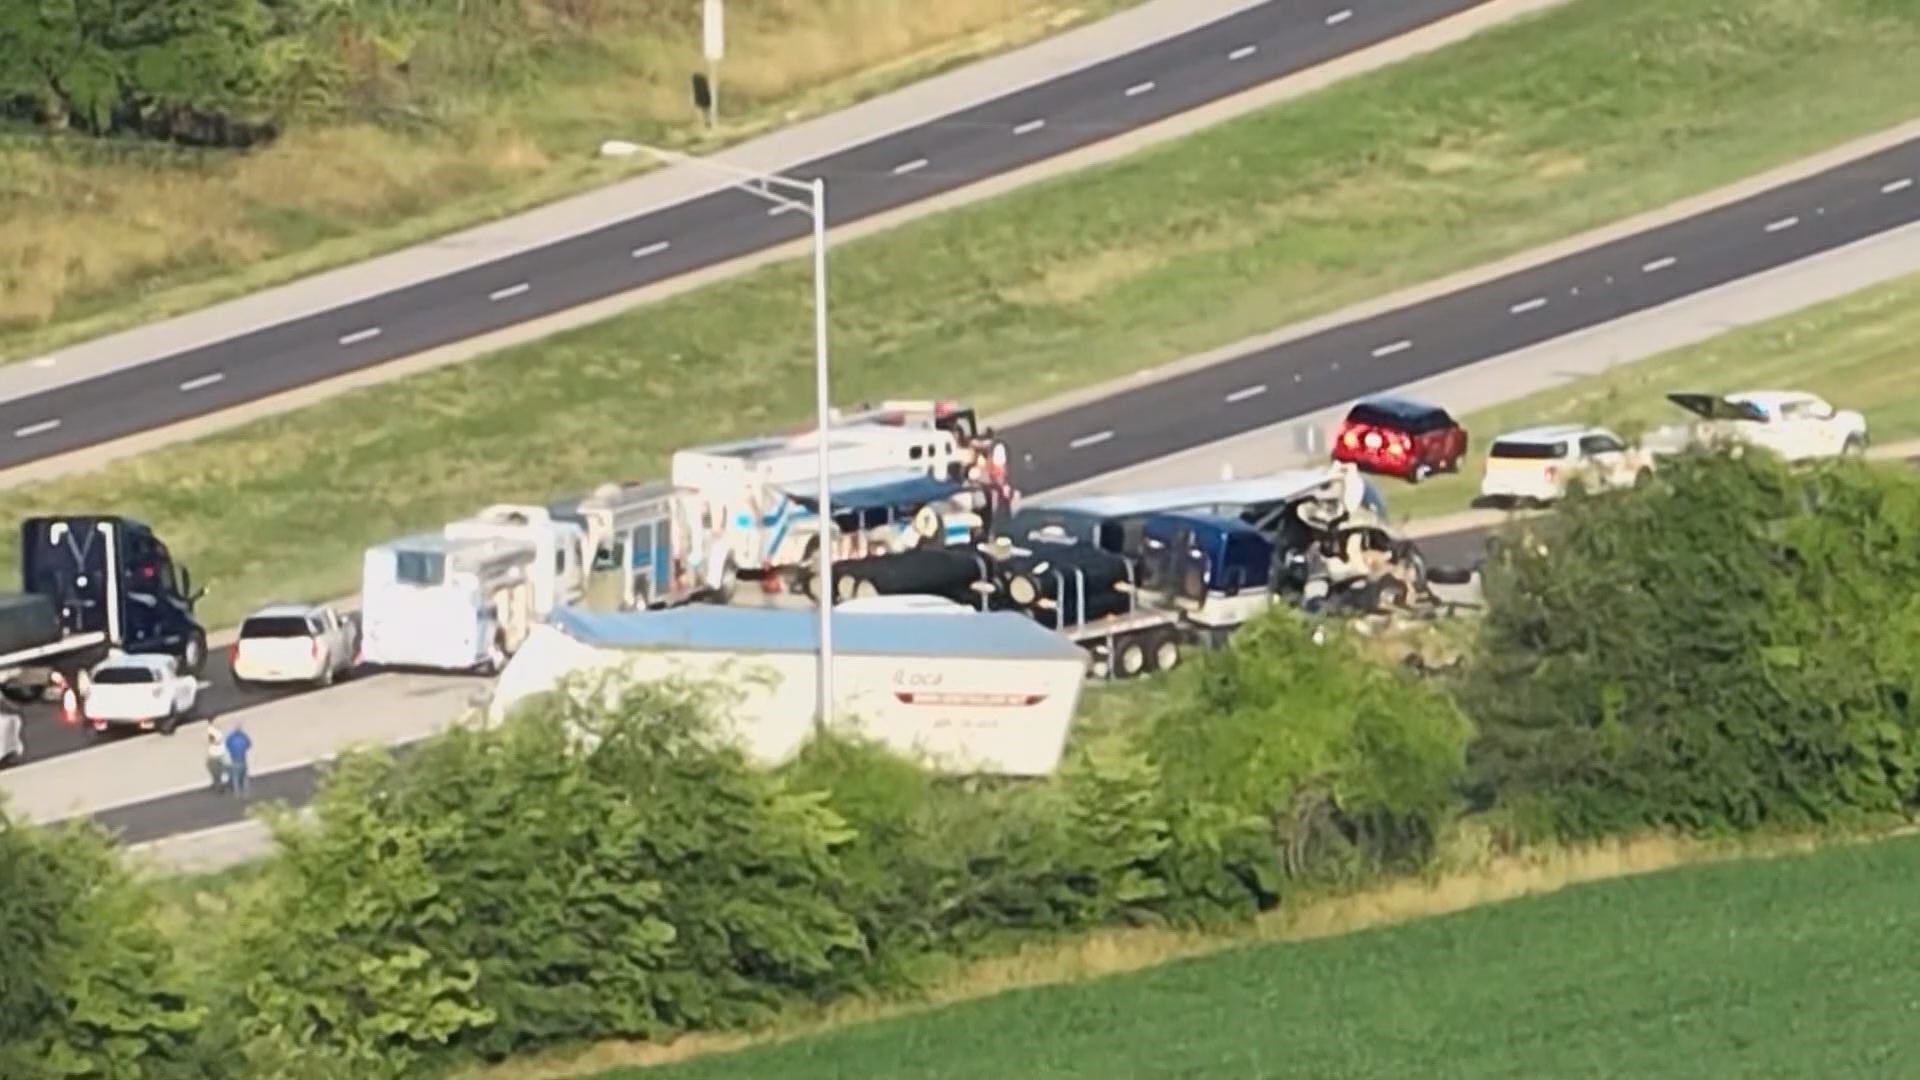 Drone video Greyhound bus crash in Highland, Illinois